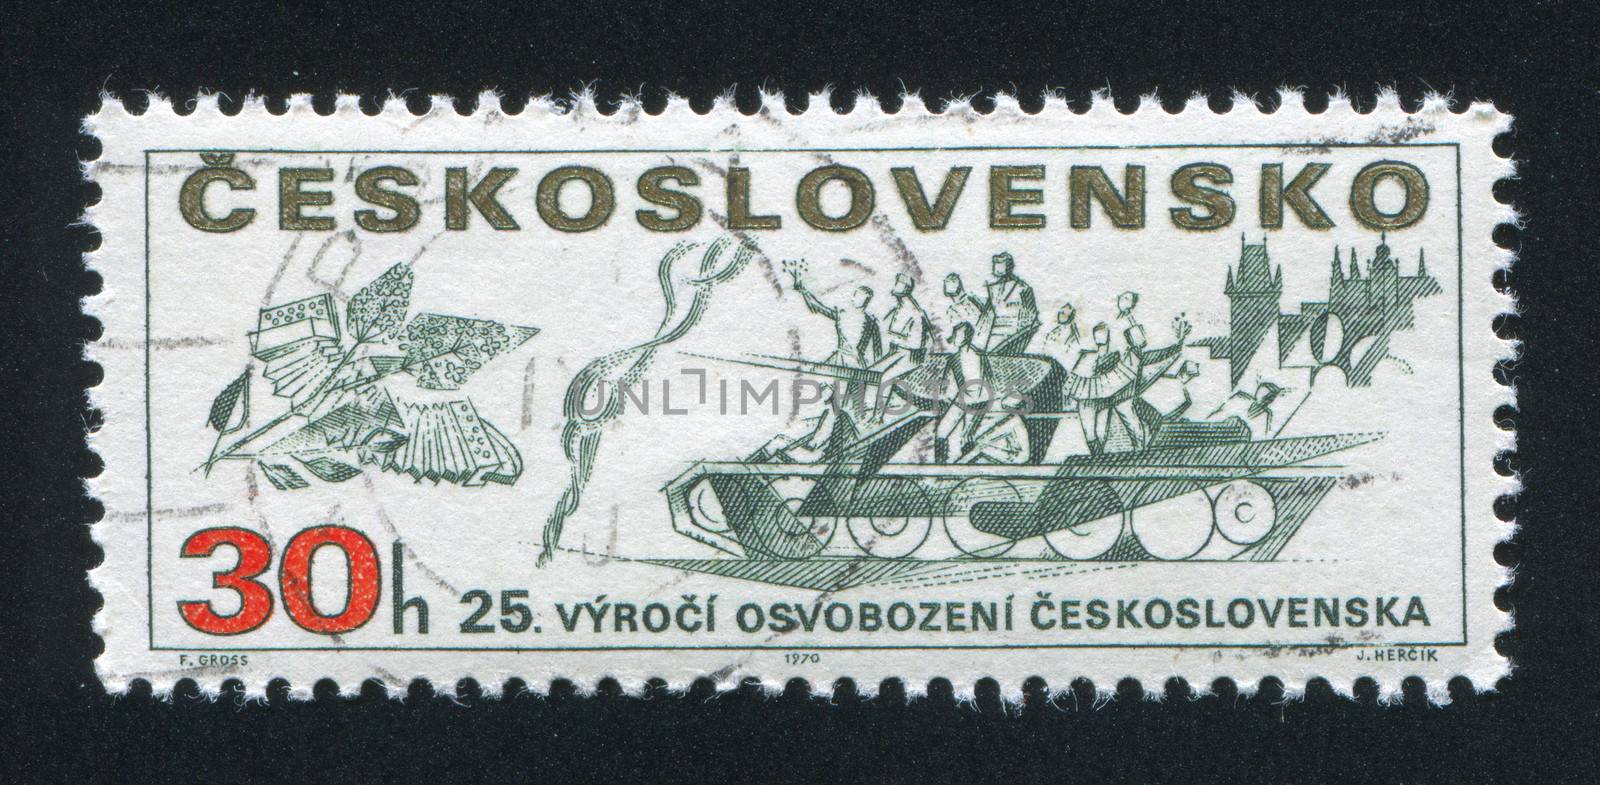 CZECHOSLOVAKIA - CIRCA 1970: stamp printed by Czechoslovakia, shows Lilac, tank and castle, circa 1970